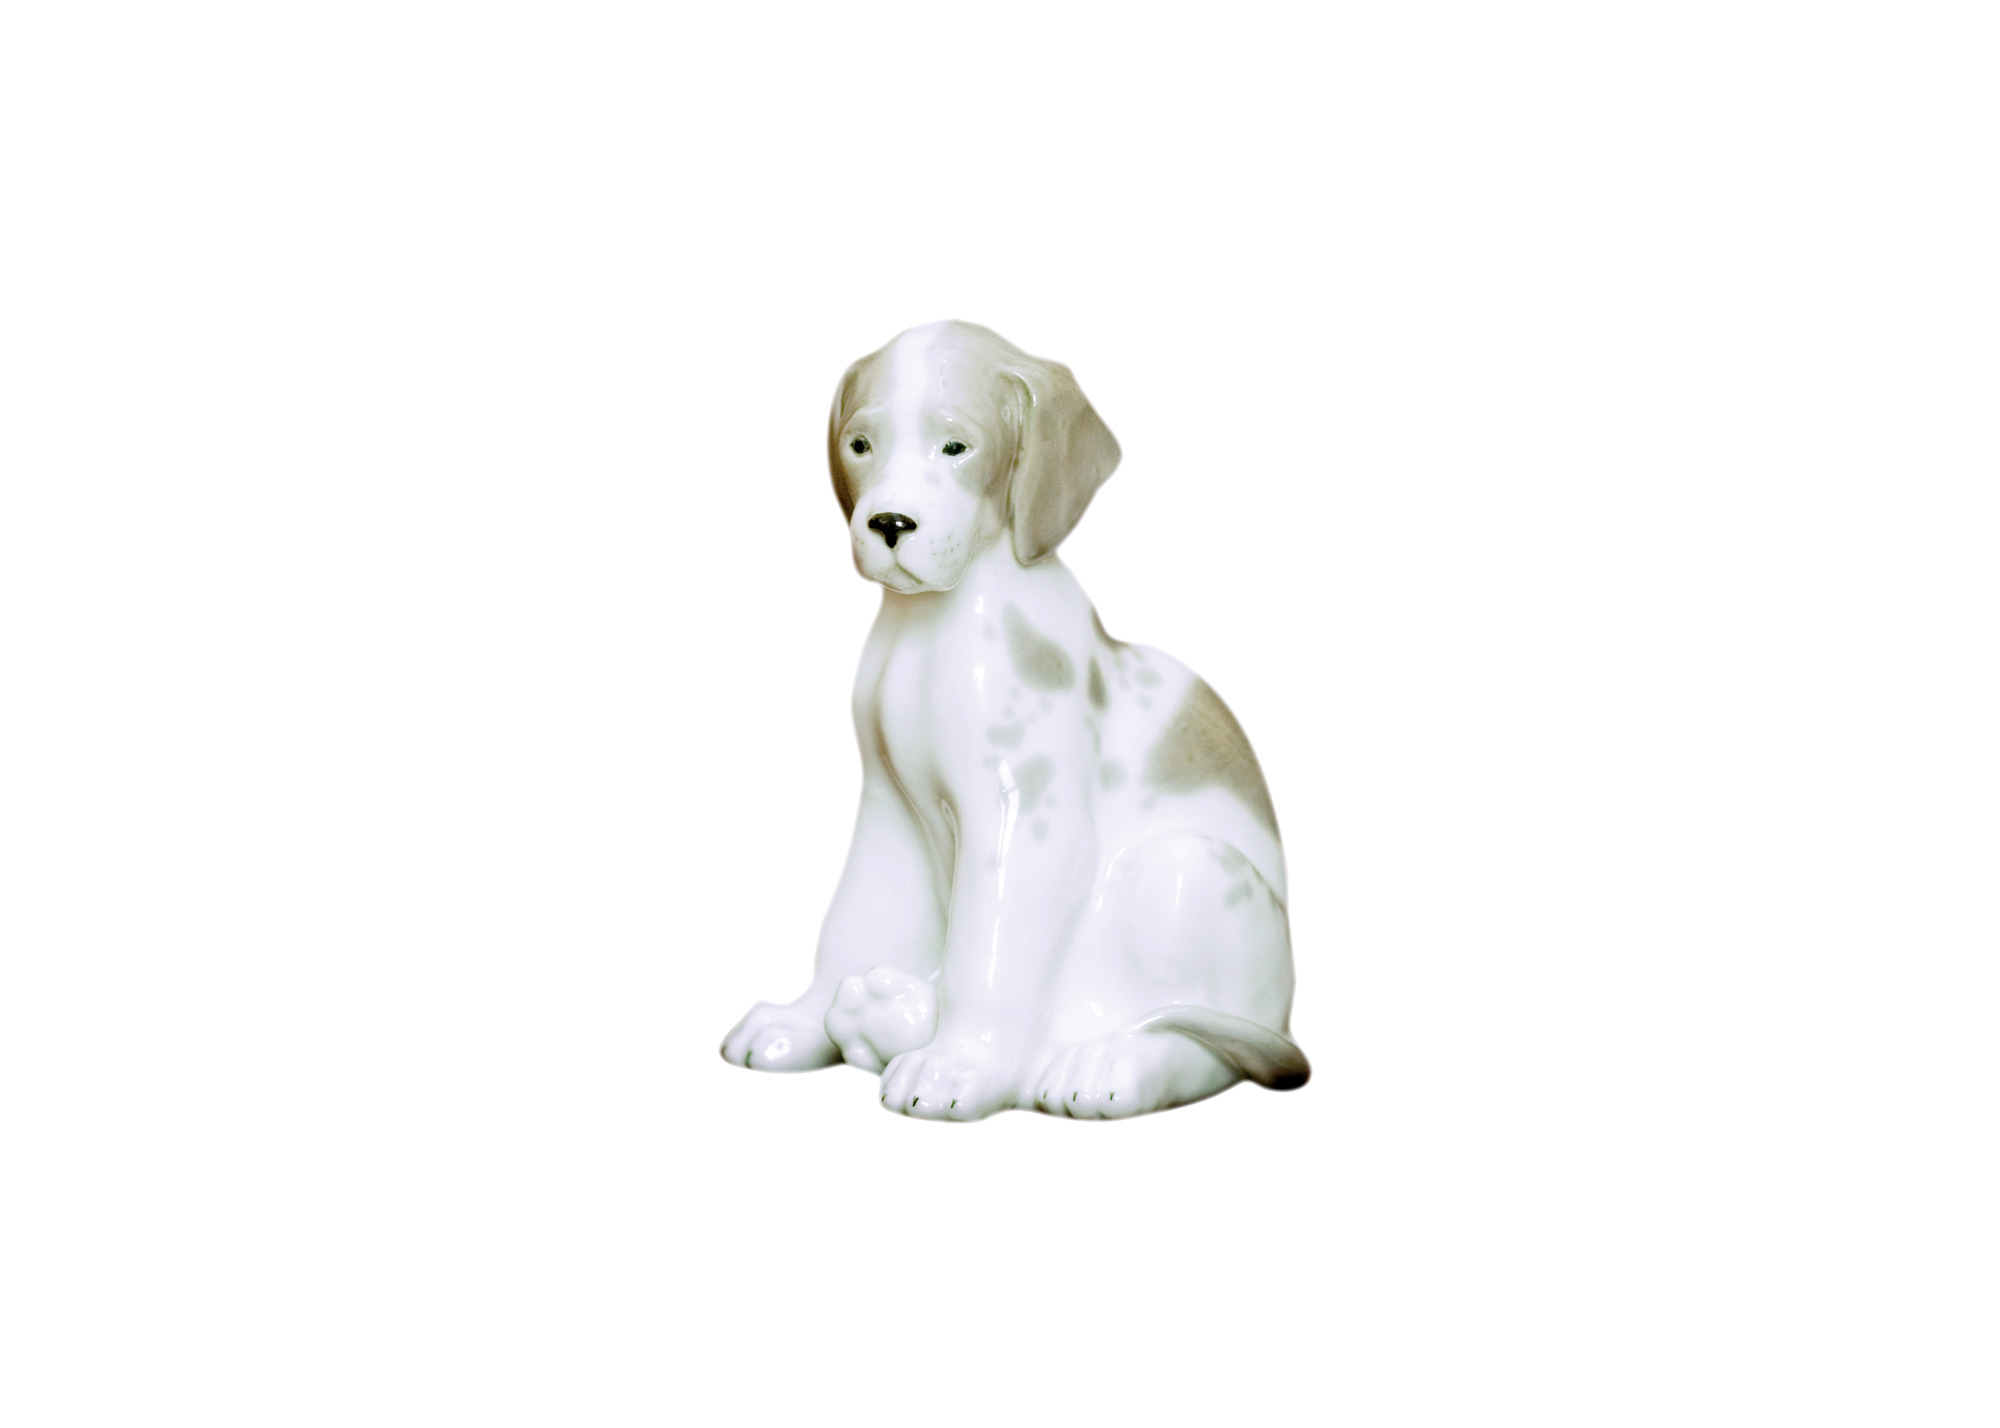 Buy Puppy Dog Figurine at GoldenCockerel.com